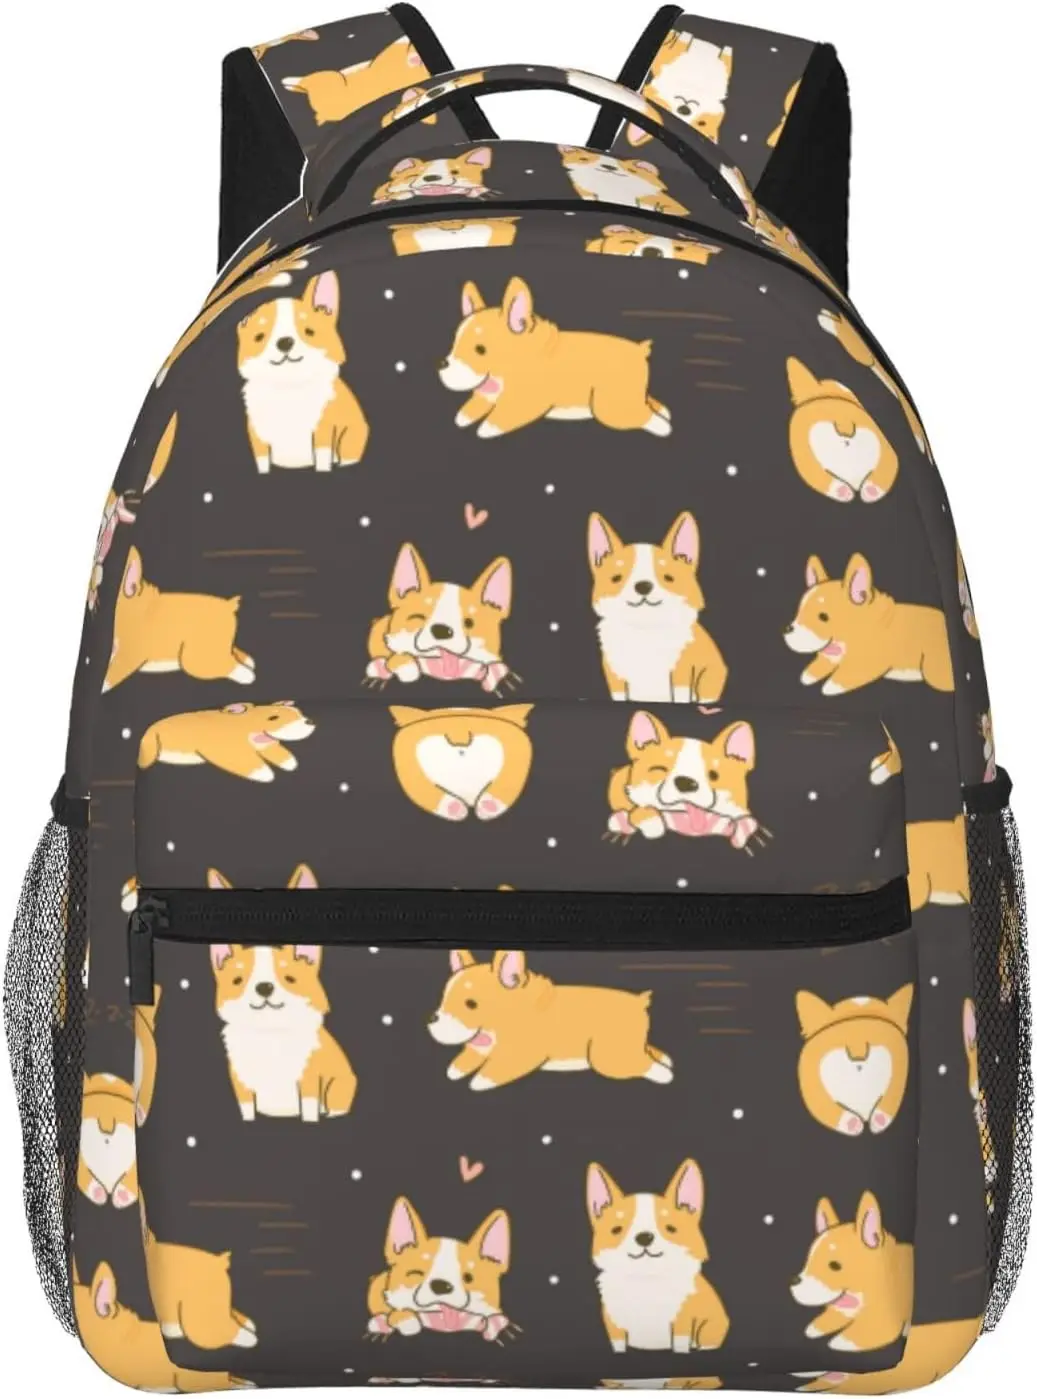 

Kawaii Corgi Dog Pattern Lightweight Laptop Backpack for Women Men College Bookbag Casual Daypack Travel Bag